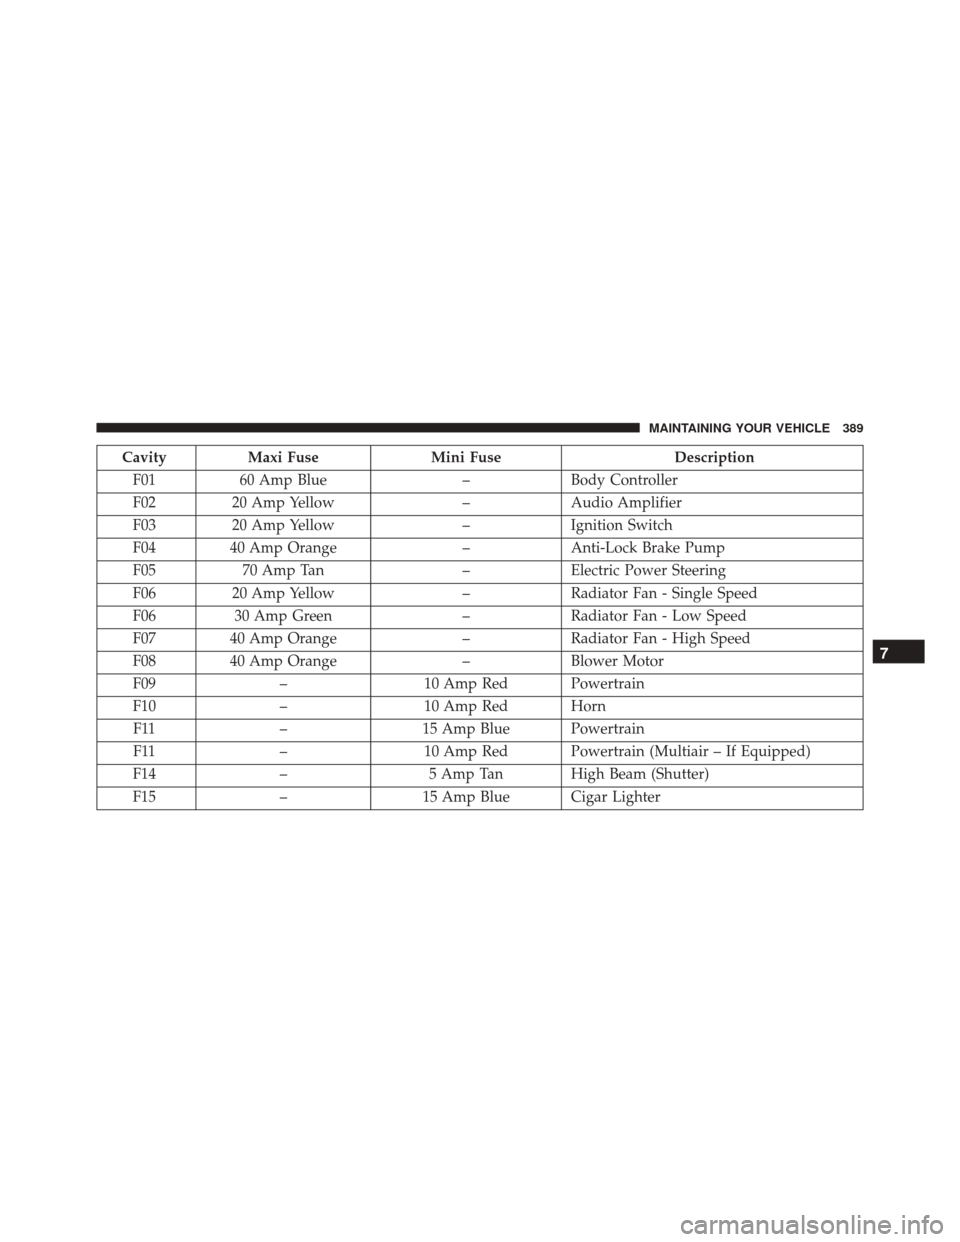 FIAT 500C 2015 2.G Owners Manual CavityMaxi Fuse Mini Fuse Description
F01 60 Amp Blue –Body Controller
F02 20 Amp Yellow –Audio Amplifier
F03 20 Amp Yellow –Ignition Switch
F04 40 Amp Orange –Anti-Lock Brake Pump
F05 70 Amp 